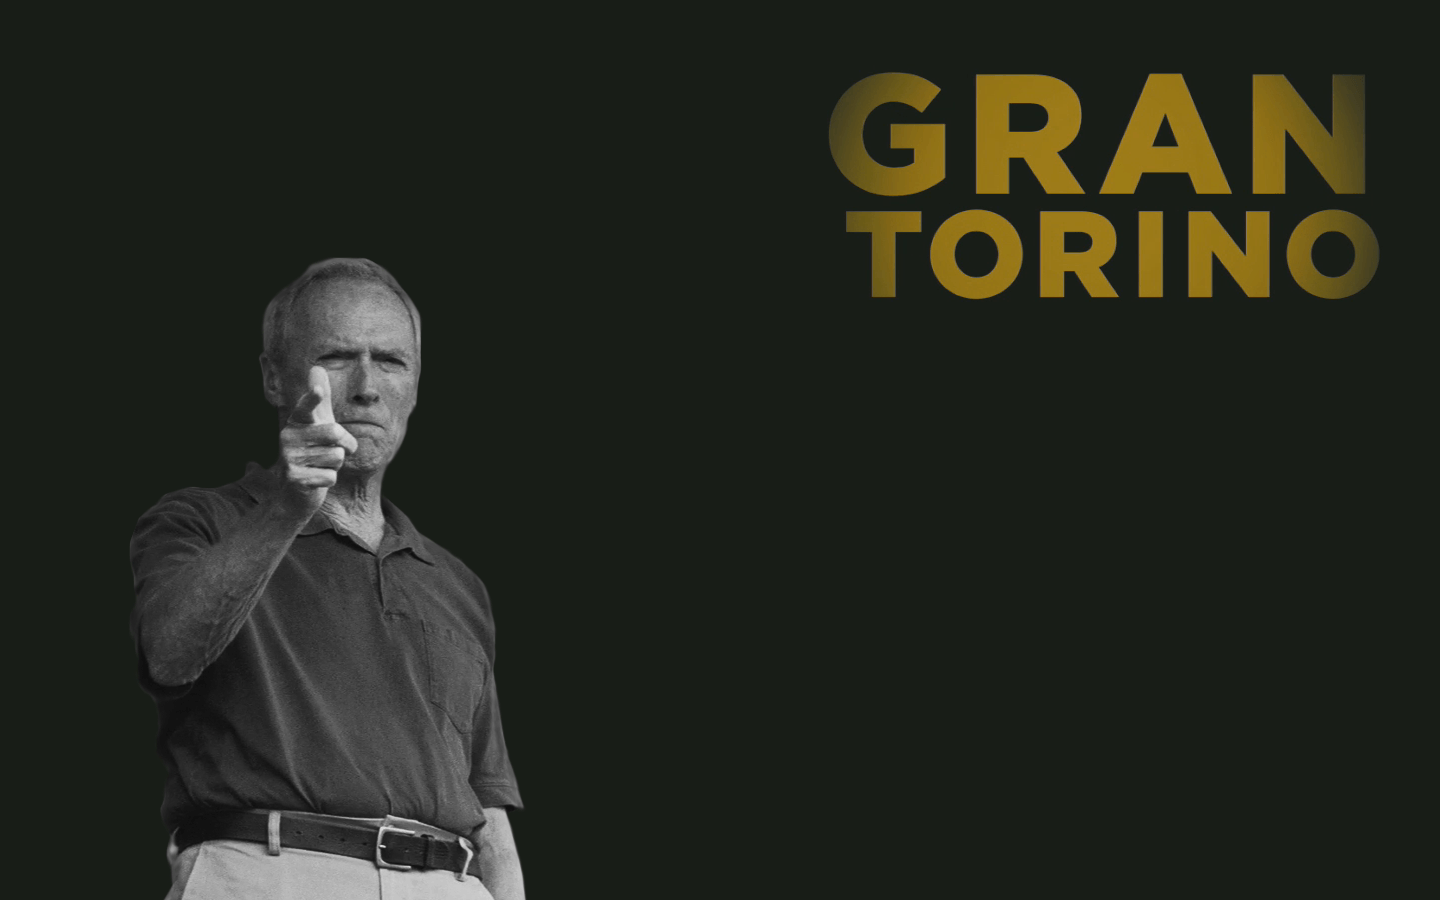 A simple Gran Torino wallpaper